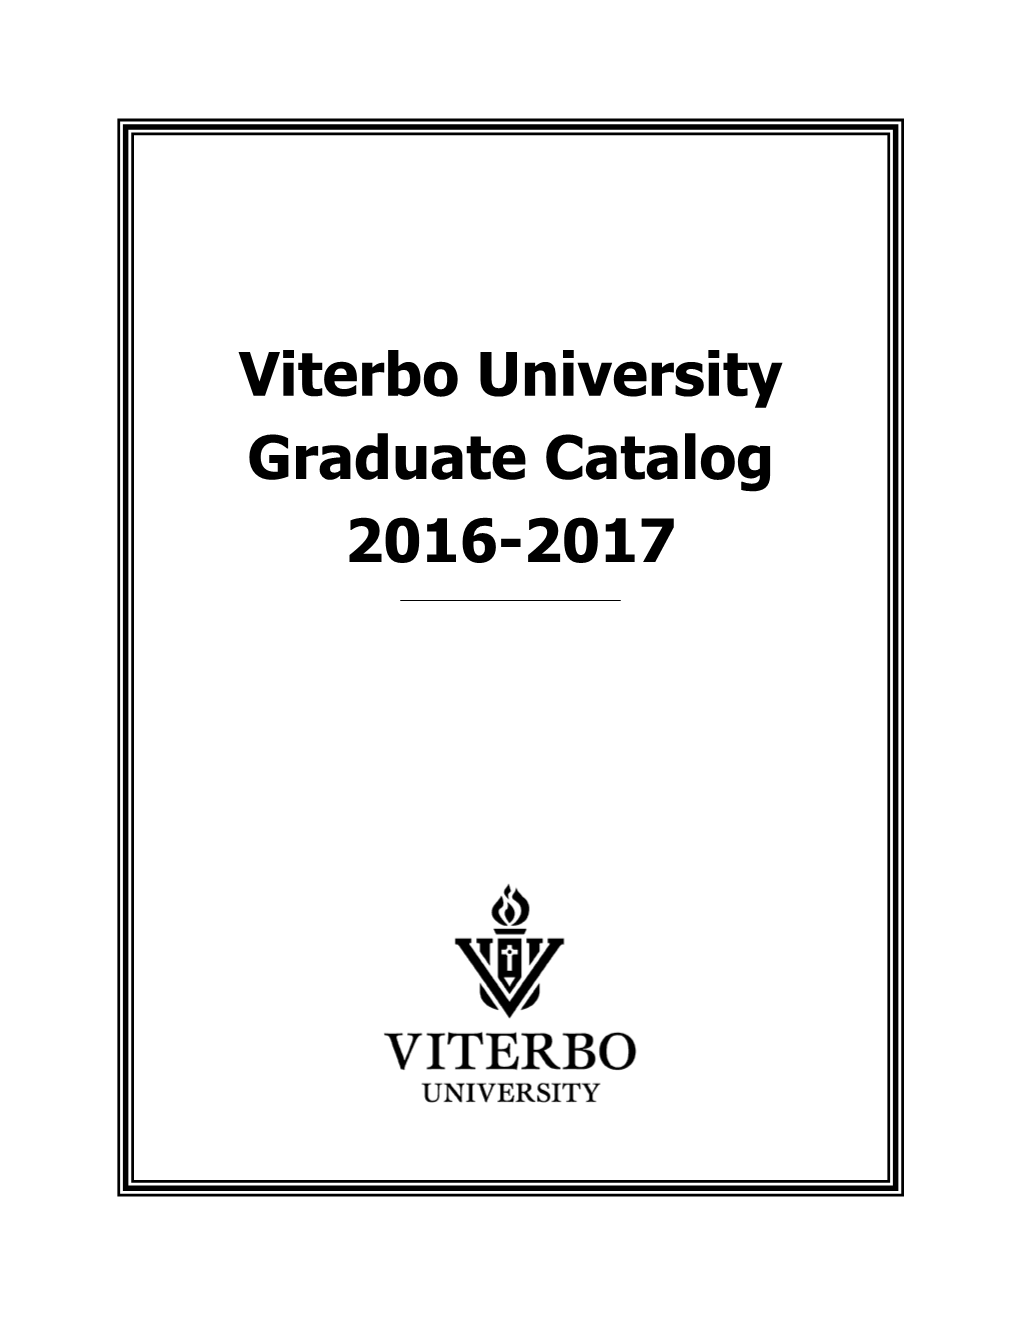 Viterbo University Graduate Catalog 2016-2017